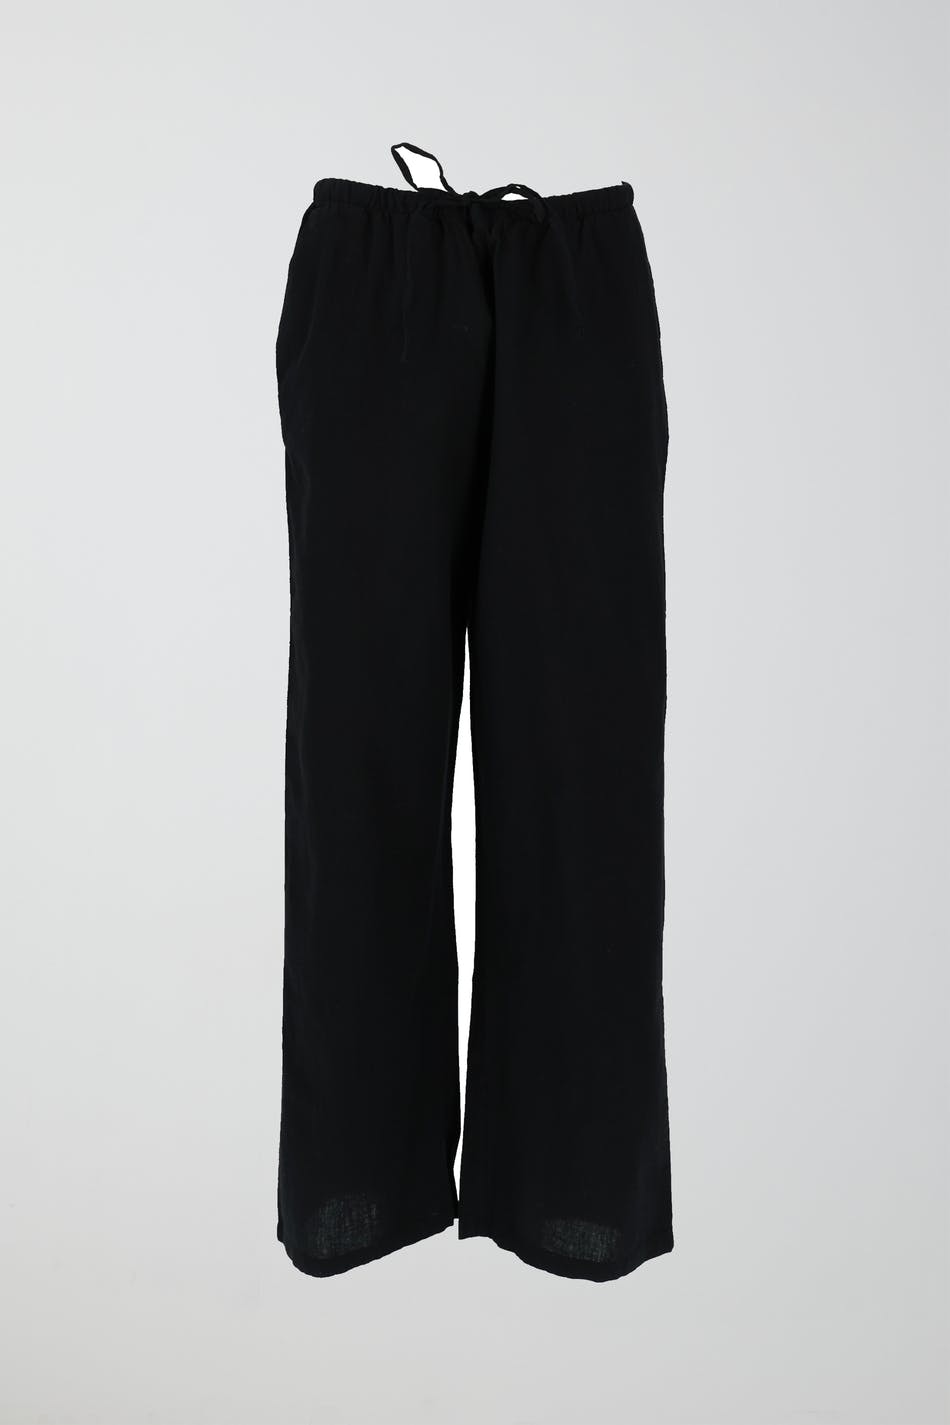 Gina Tricot - Tall linen blend trousers - linnebyxor - Black - M - Female